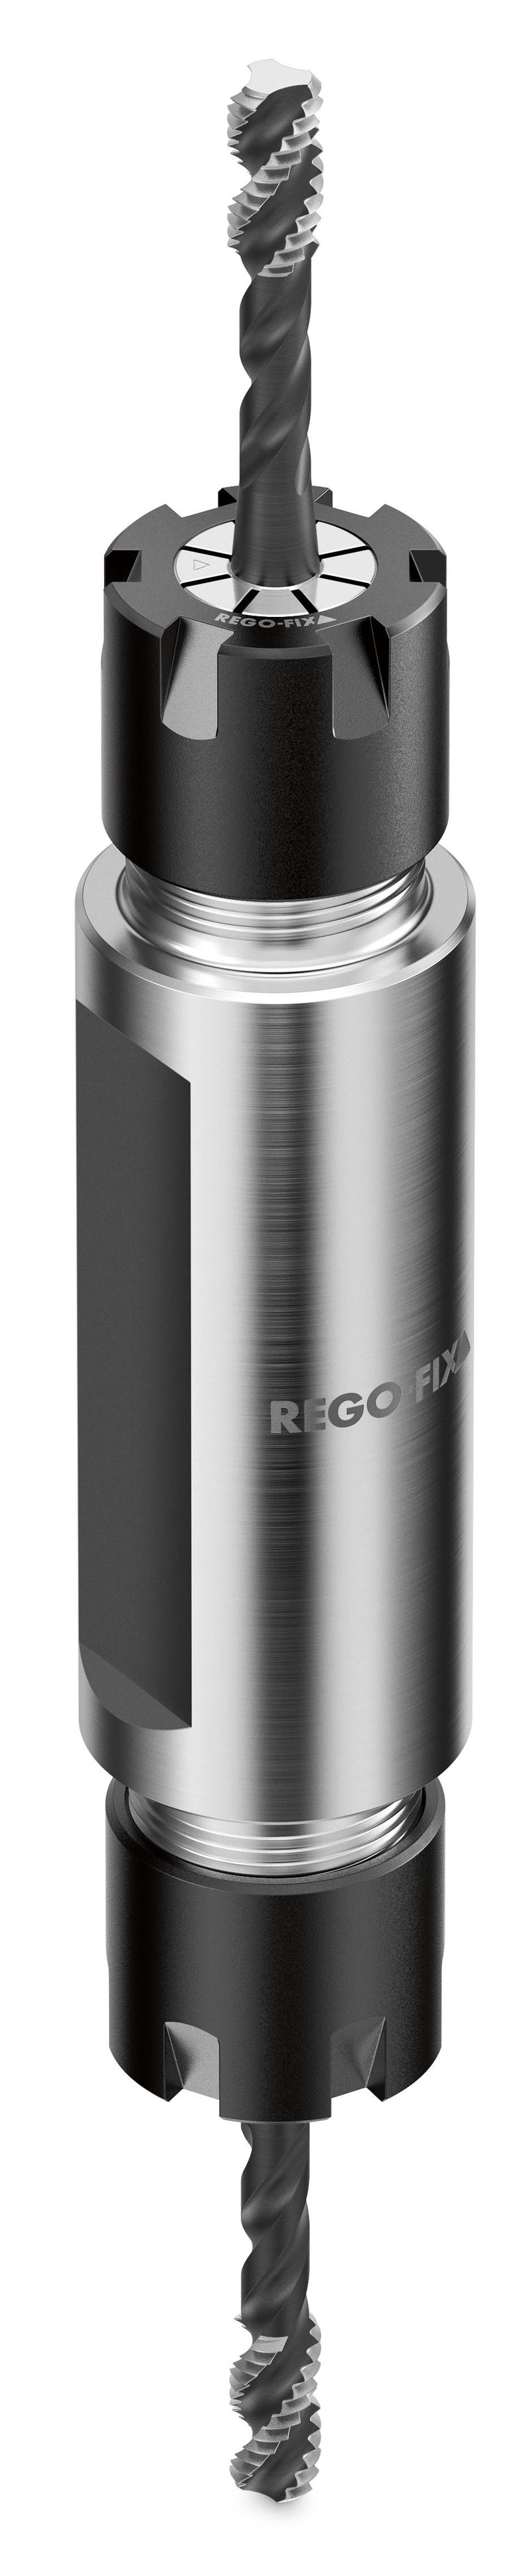 Rego-Fix CYDF 20 x 030/ERM 11 Tool Holder 2620.21114 (0647792)